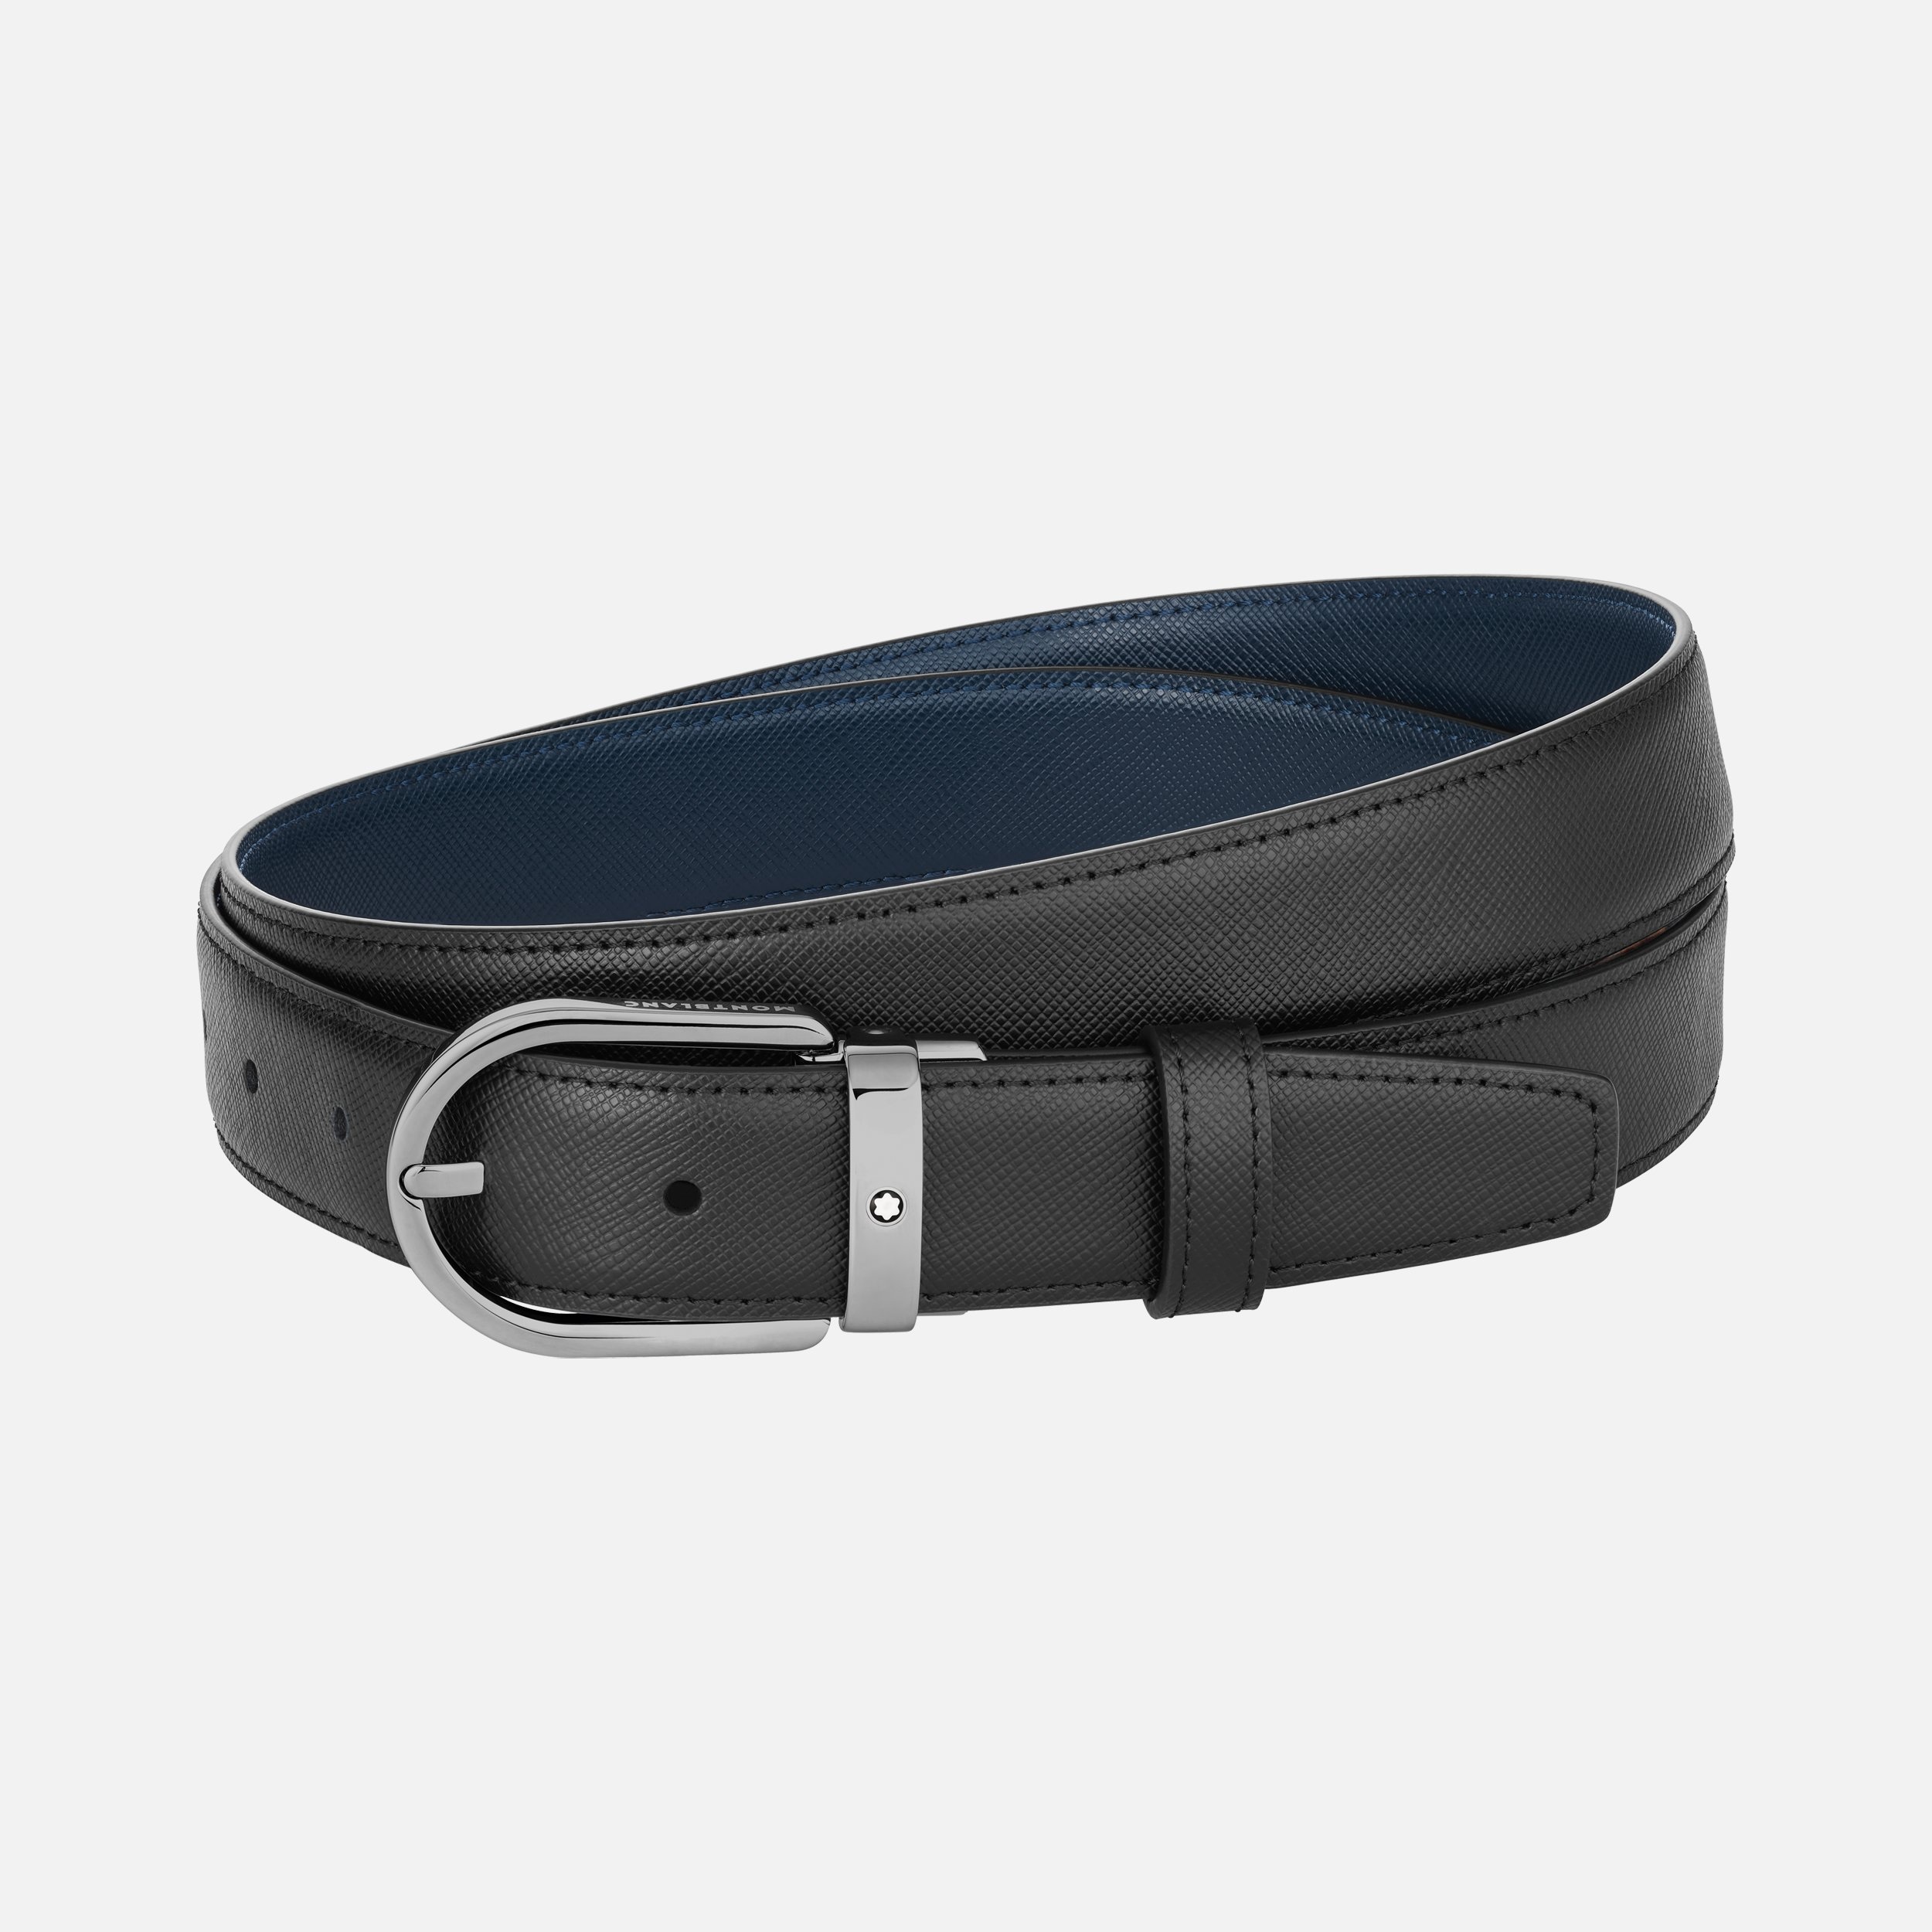 Horseshoe buckle black/blue 30 mm reversible leather belt - 1